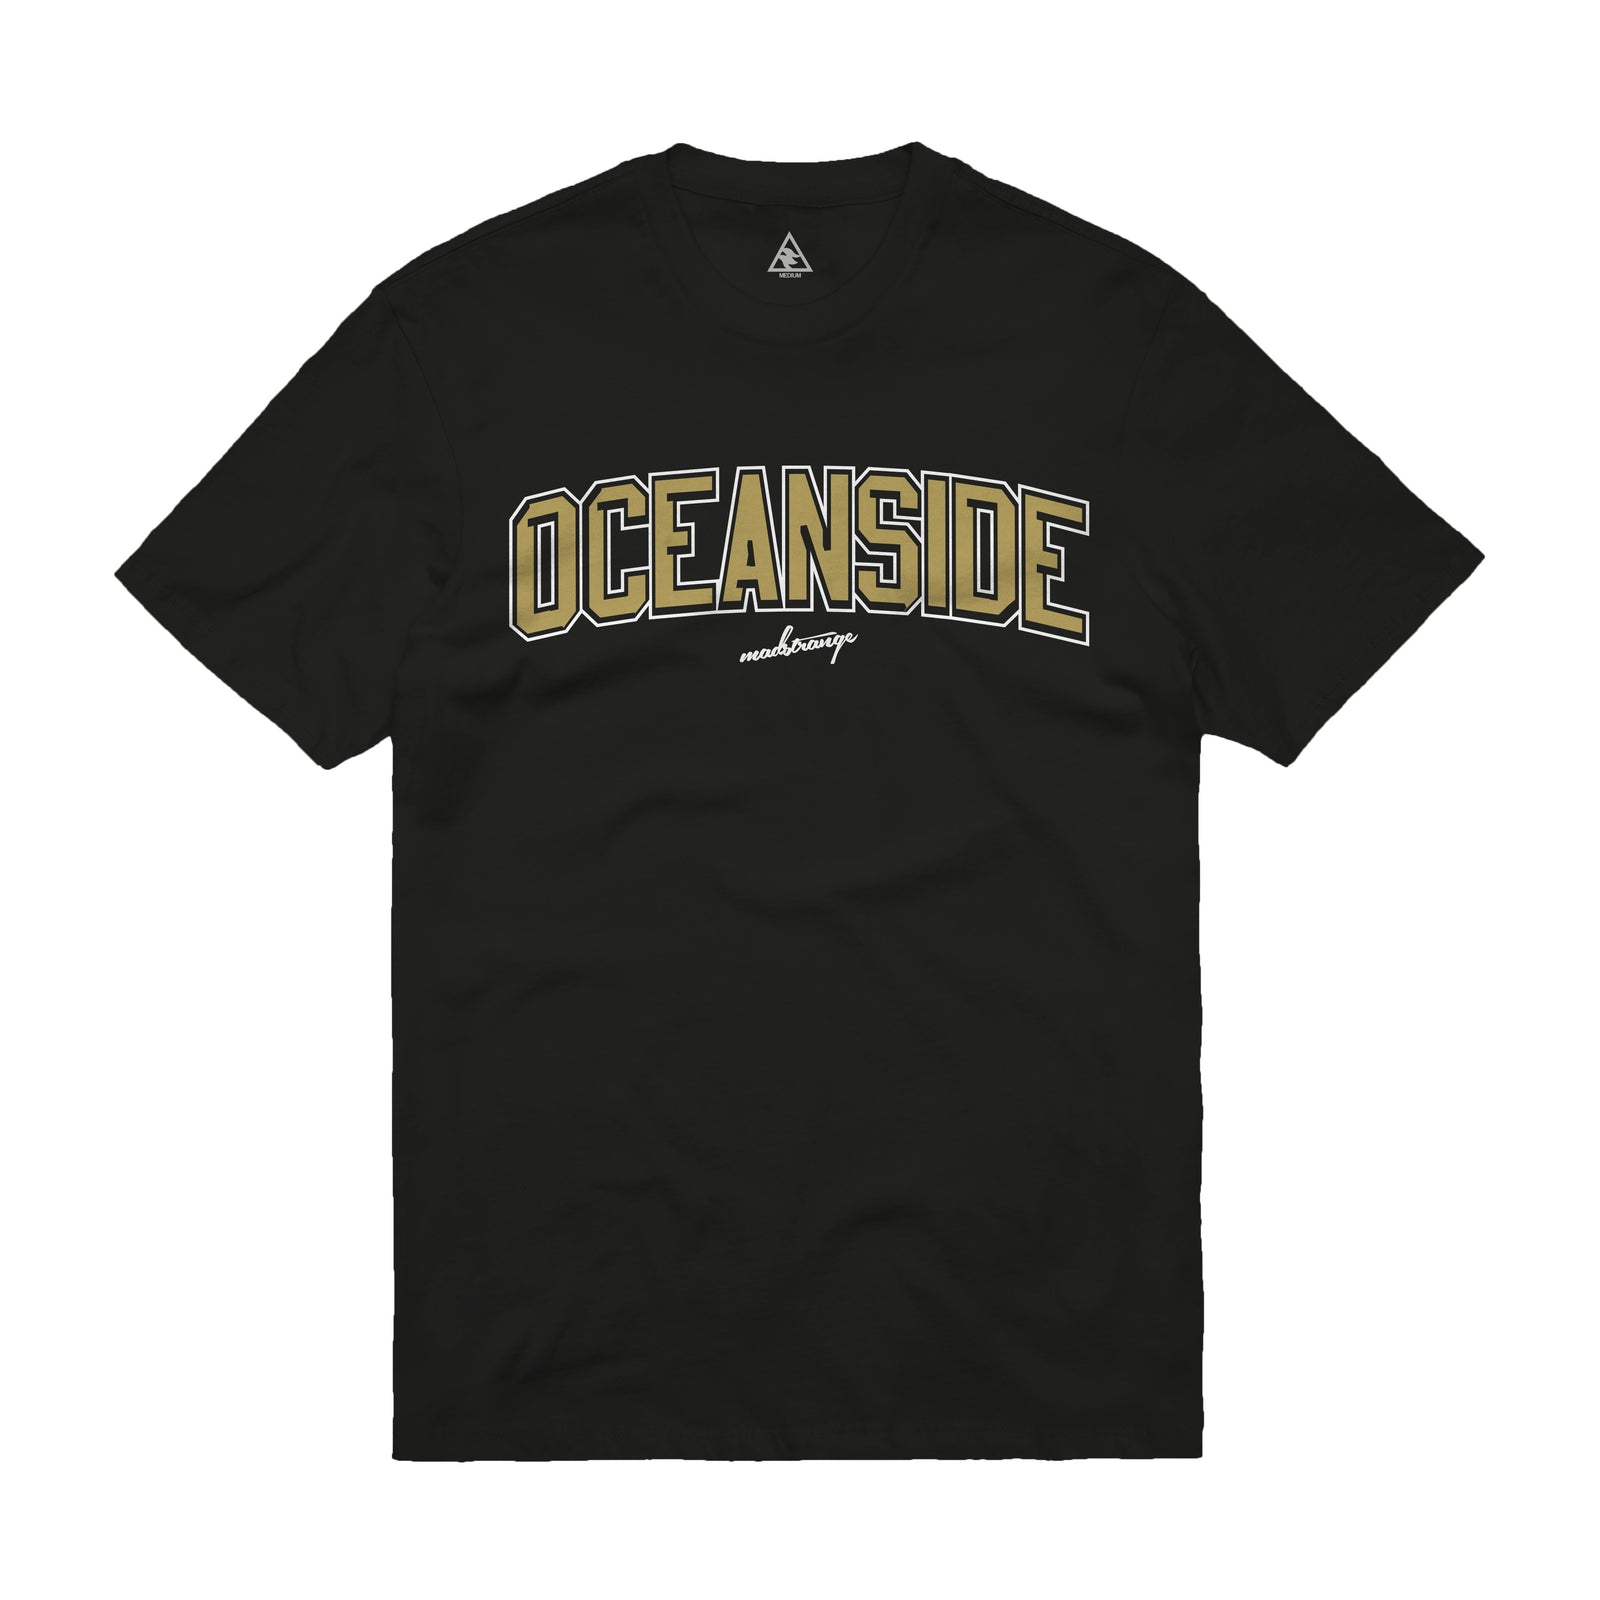 Oceanside Athletic Gold T-Shirt (Black)